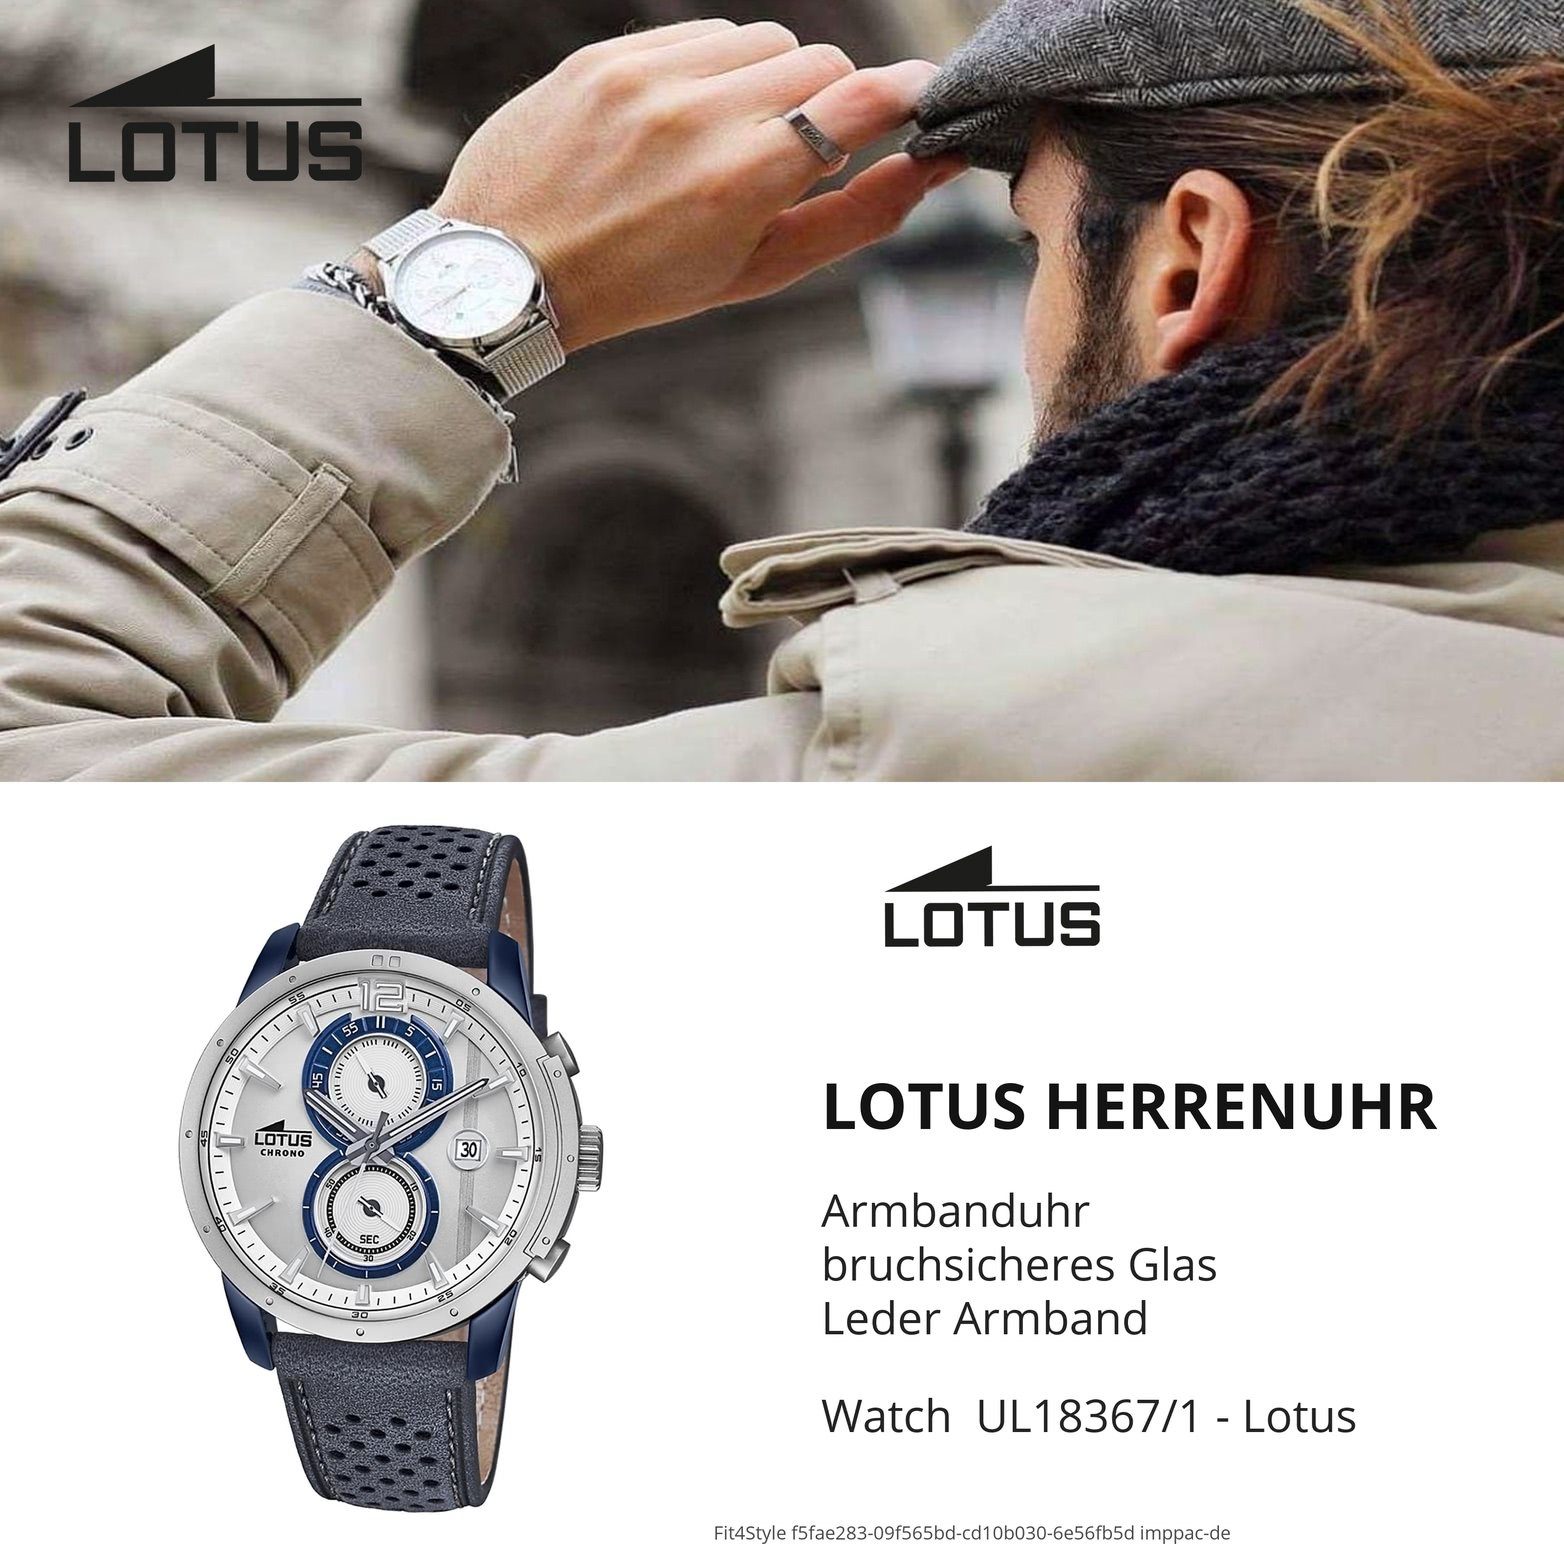 Lotus Chronograph Herrenuhr Herren Chrono rundes groß Gehäuse, Uhr Sport-Sty mit Leder Lotus (ca. L18367/1, Lederarmband, 44mm)